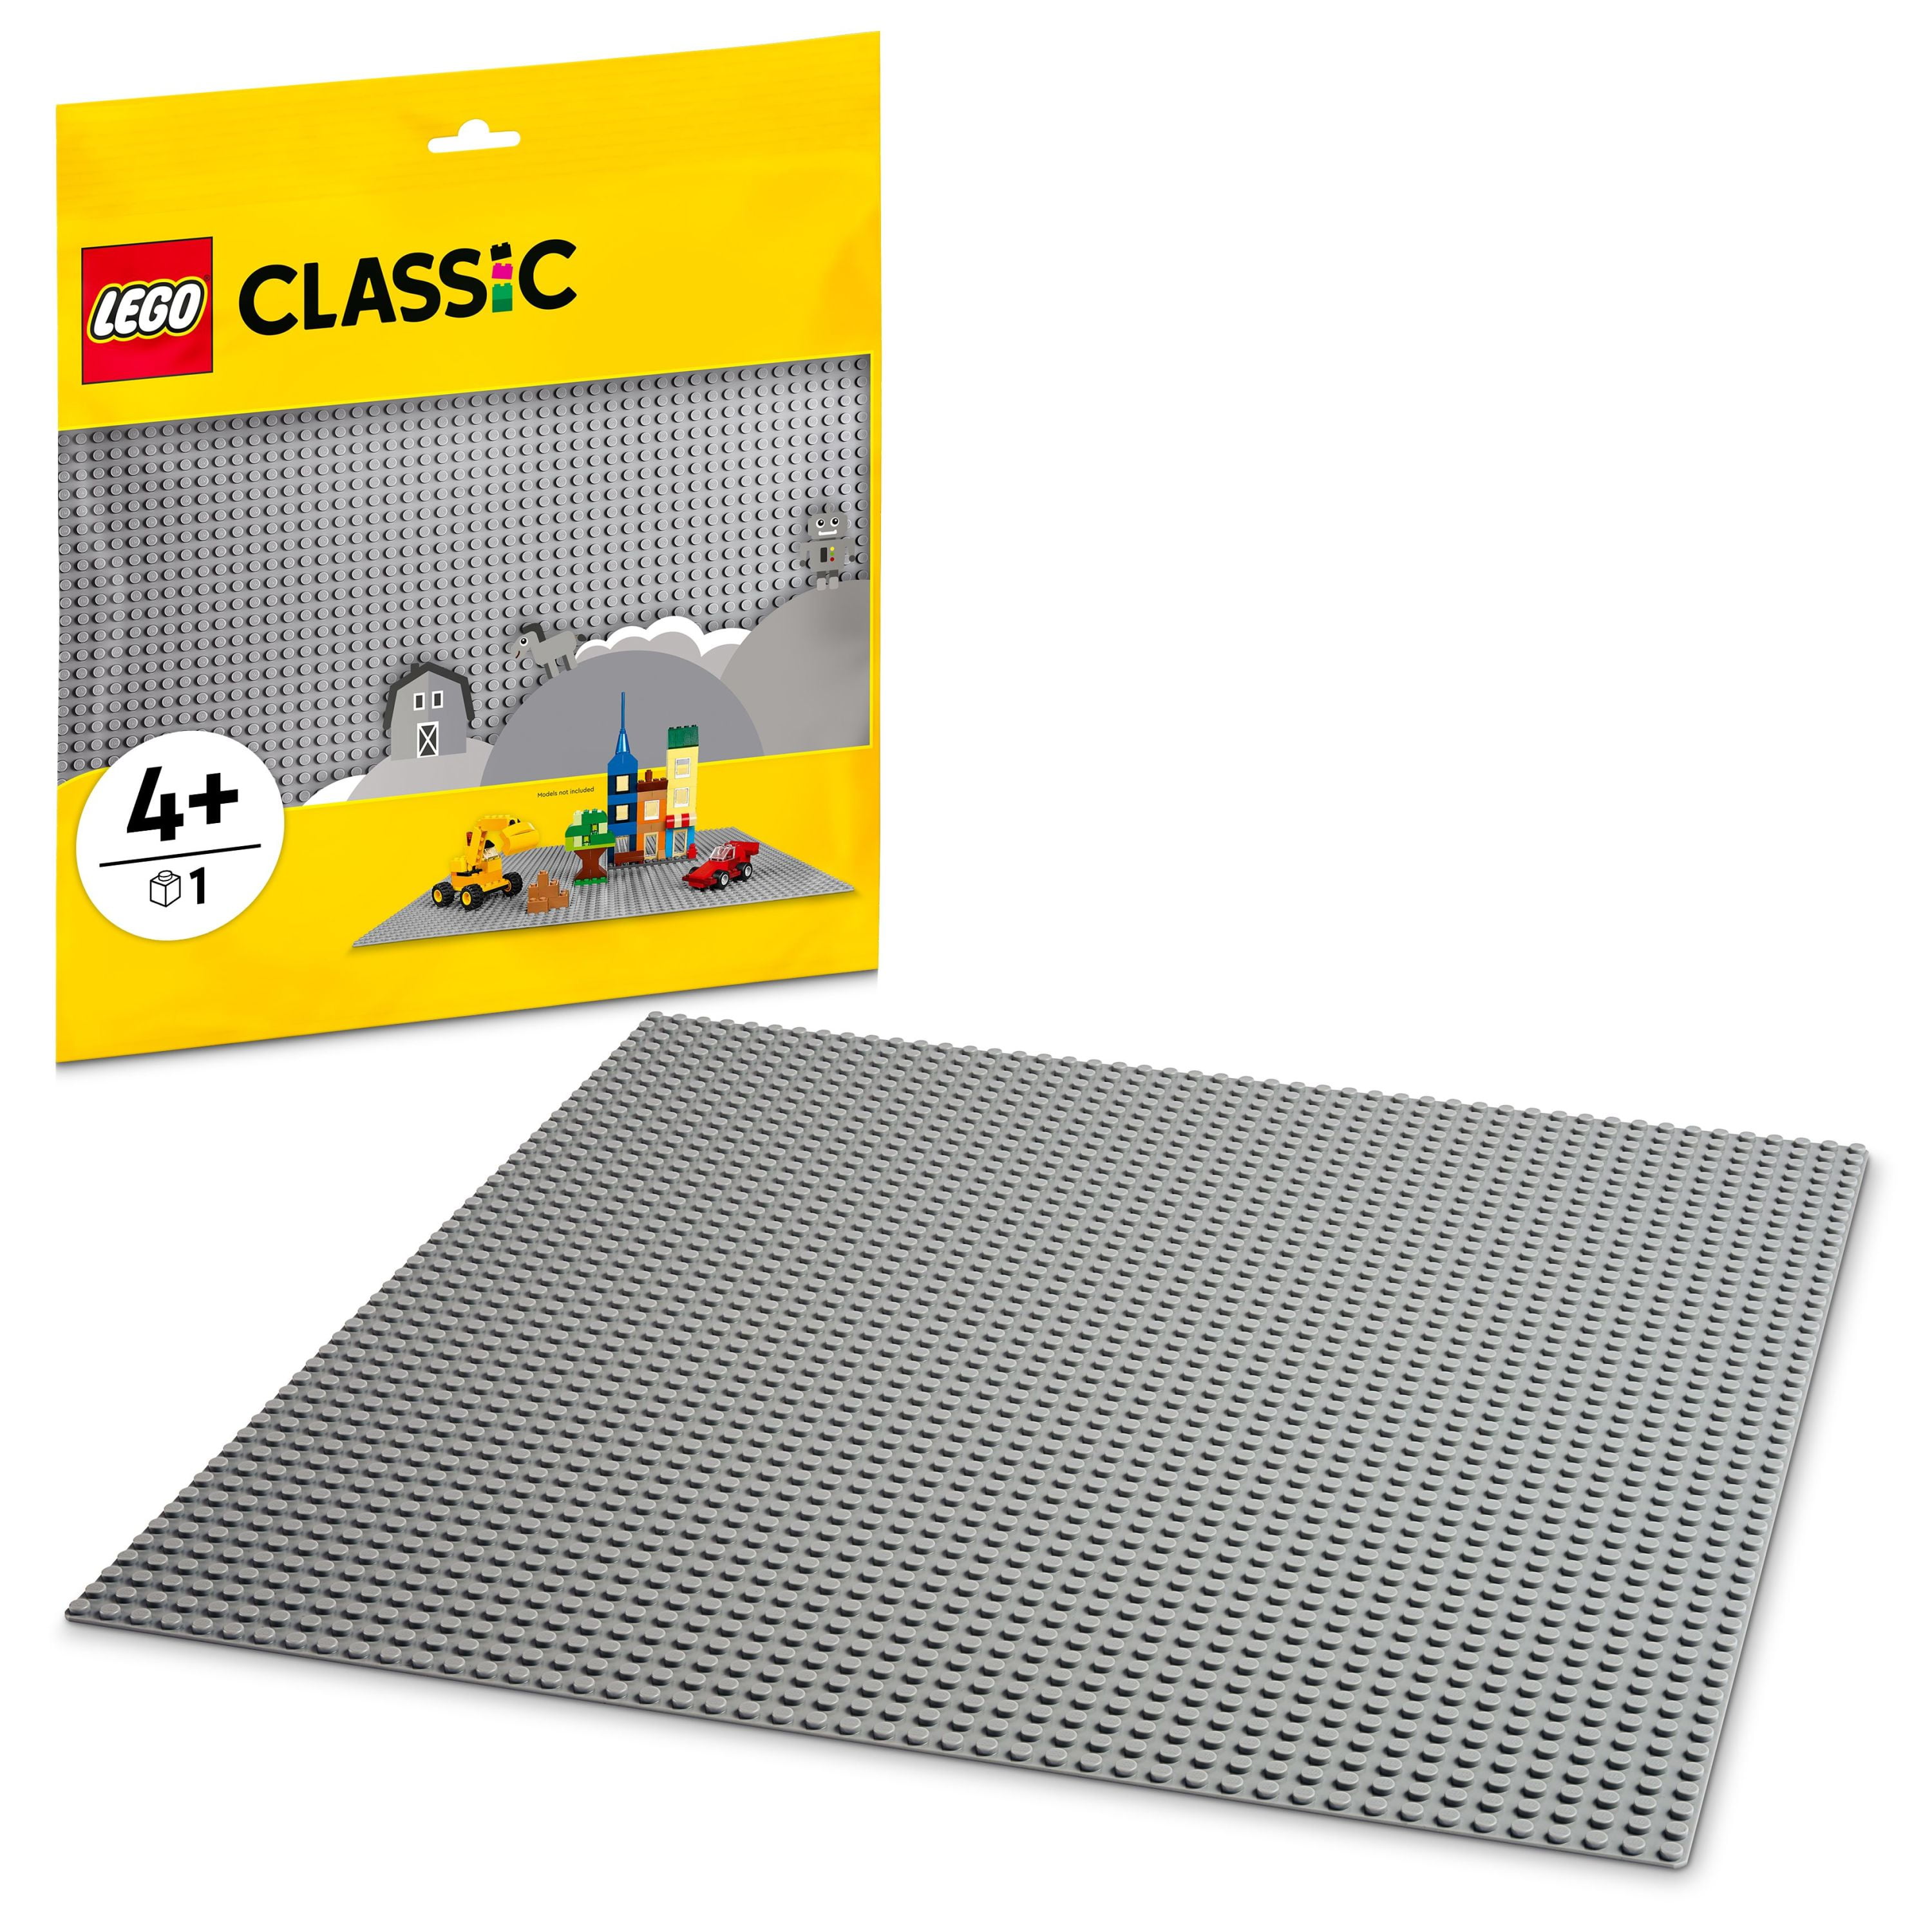 3 x Lego classic Green base plate 10700 Creative Lego Building Pad 32 X 32 dots 